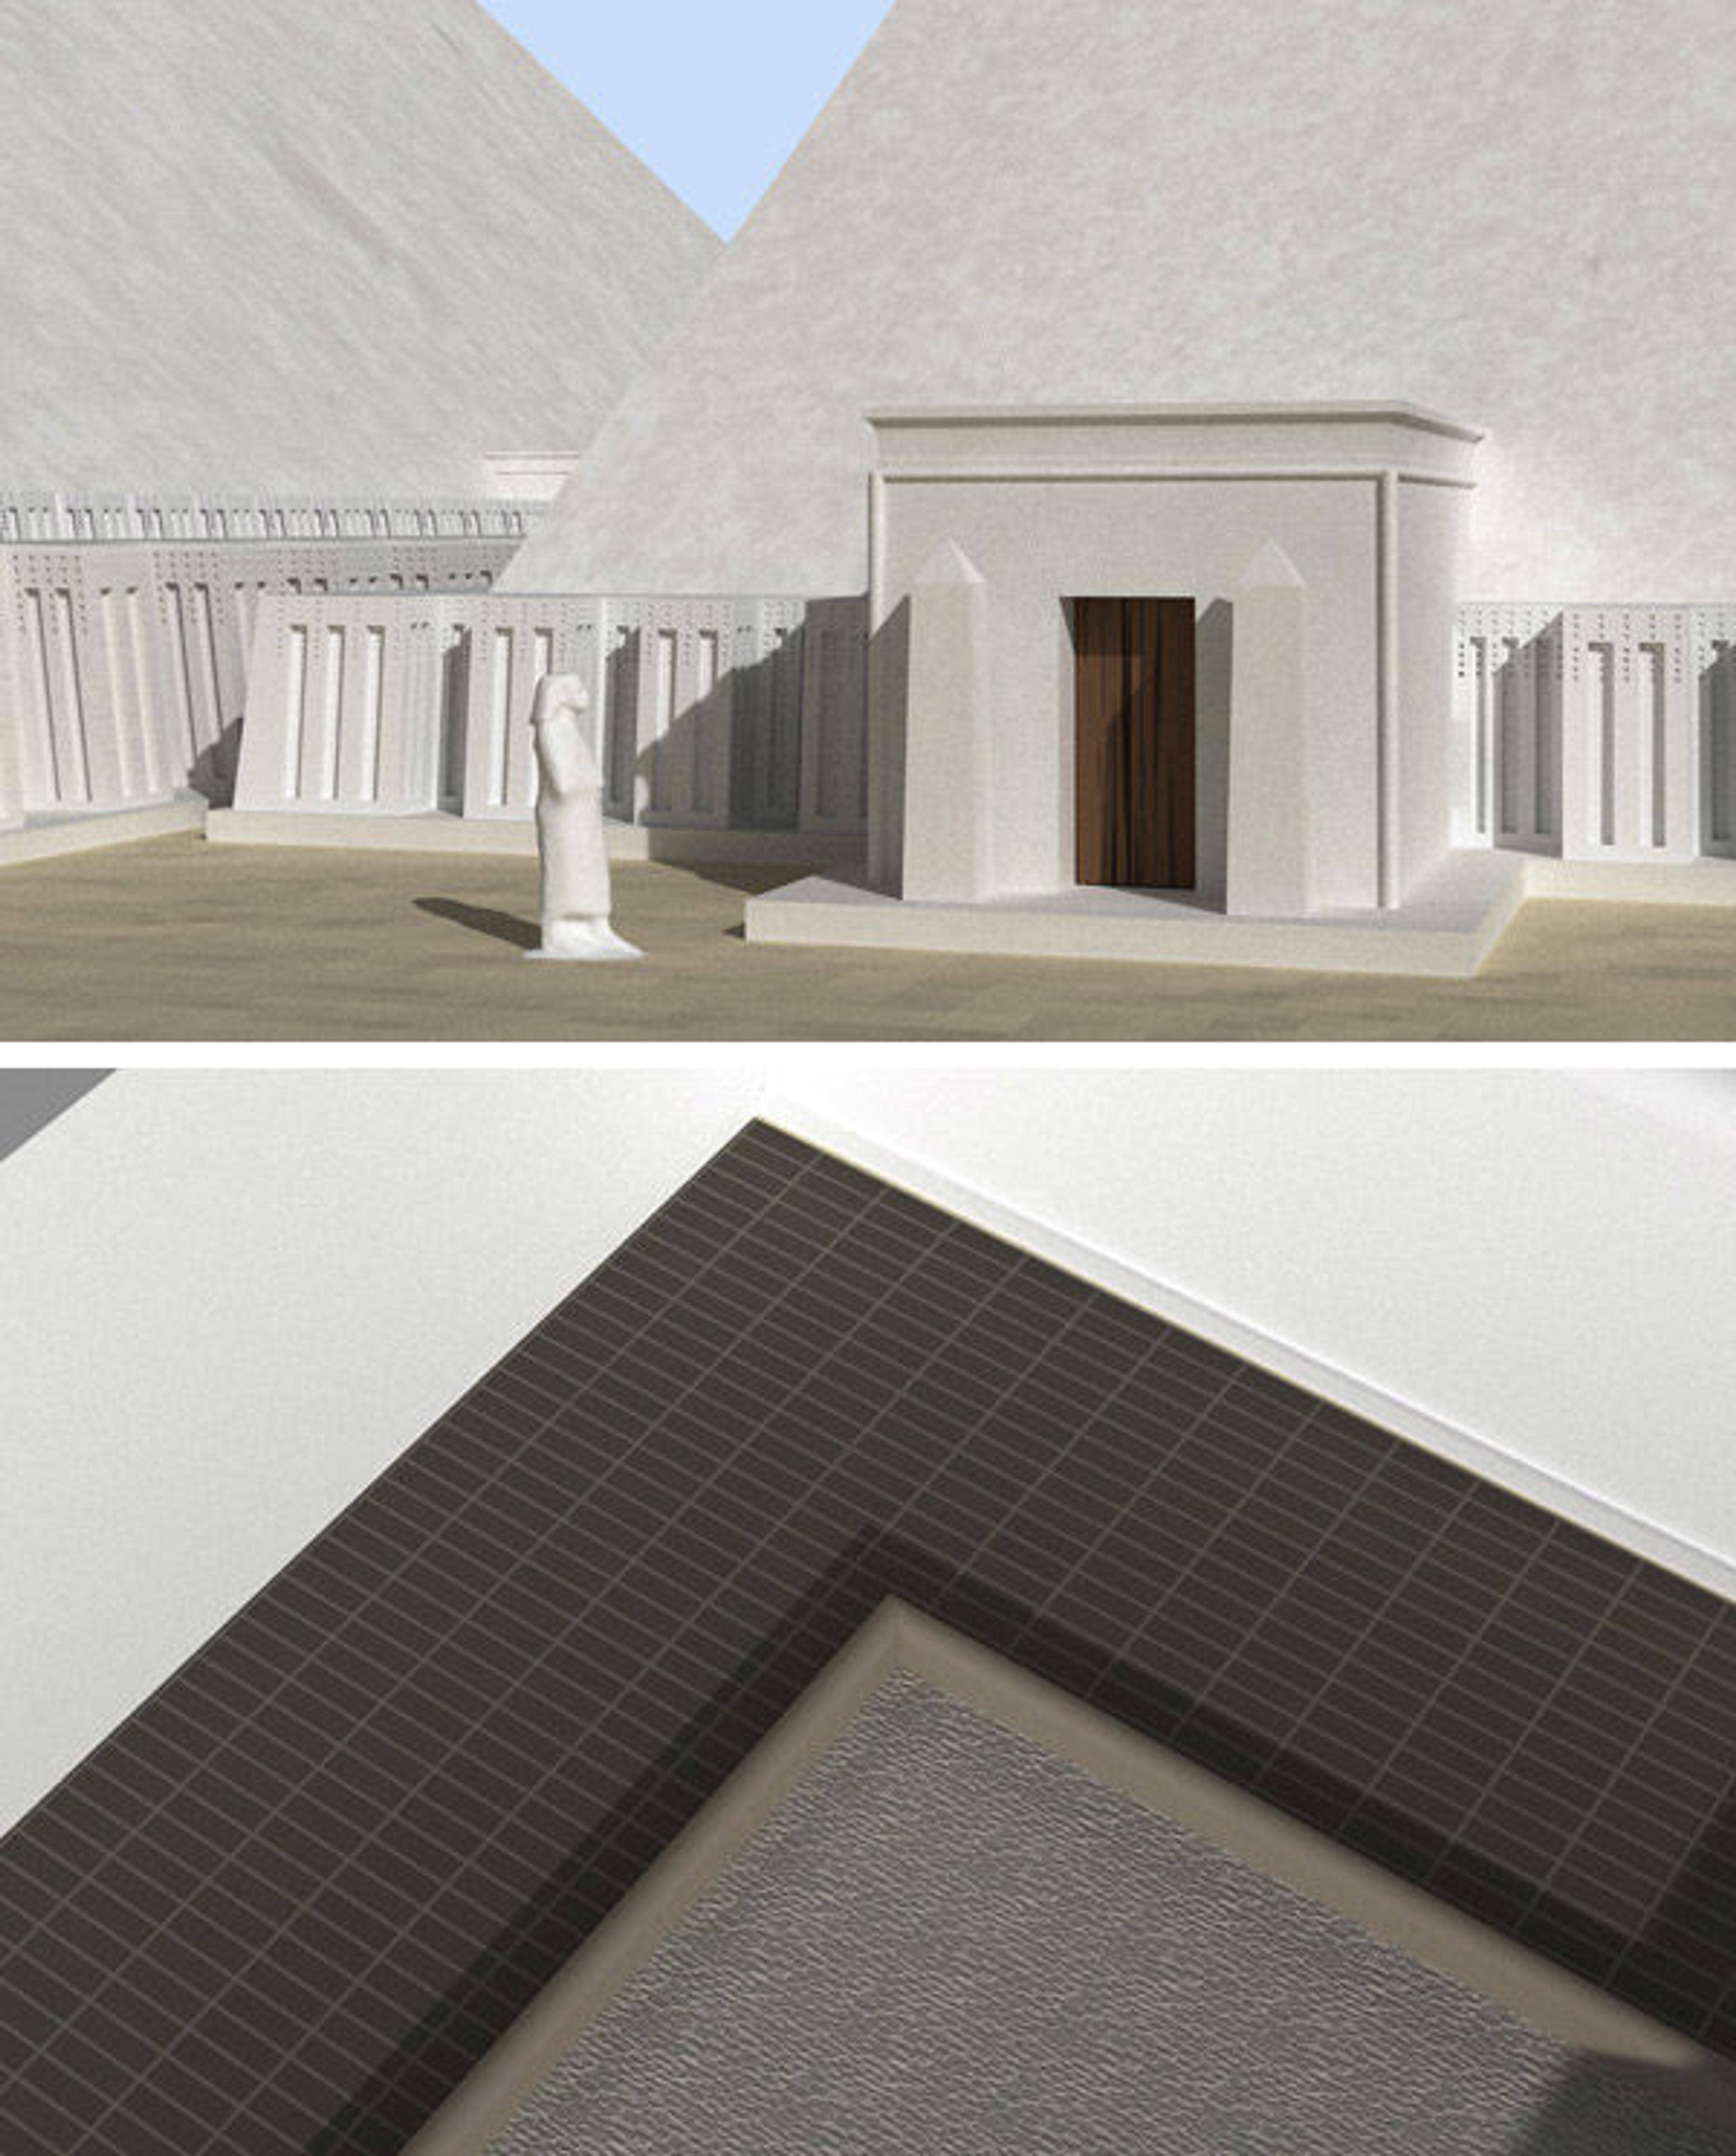 Detailed virtual rendering; Mud brick and cobblestone pavements